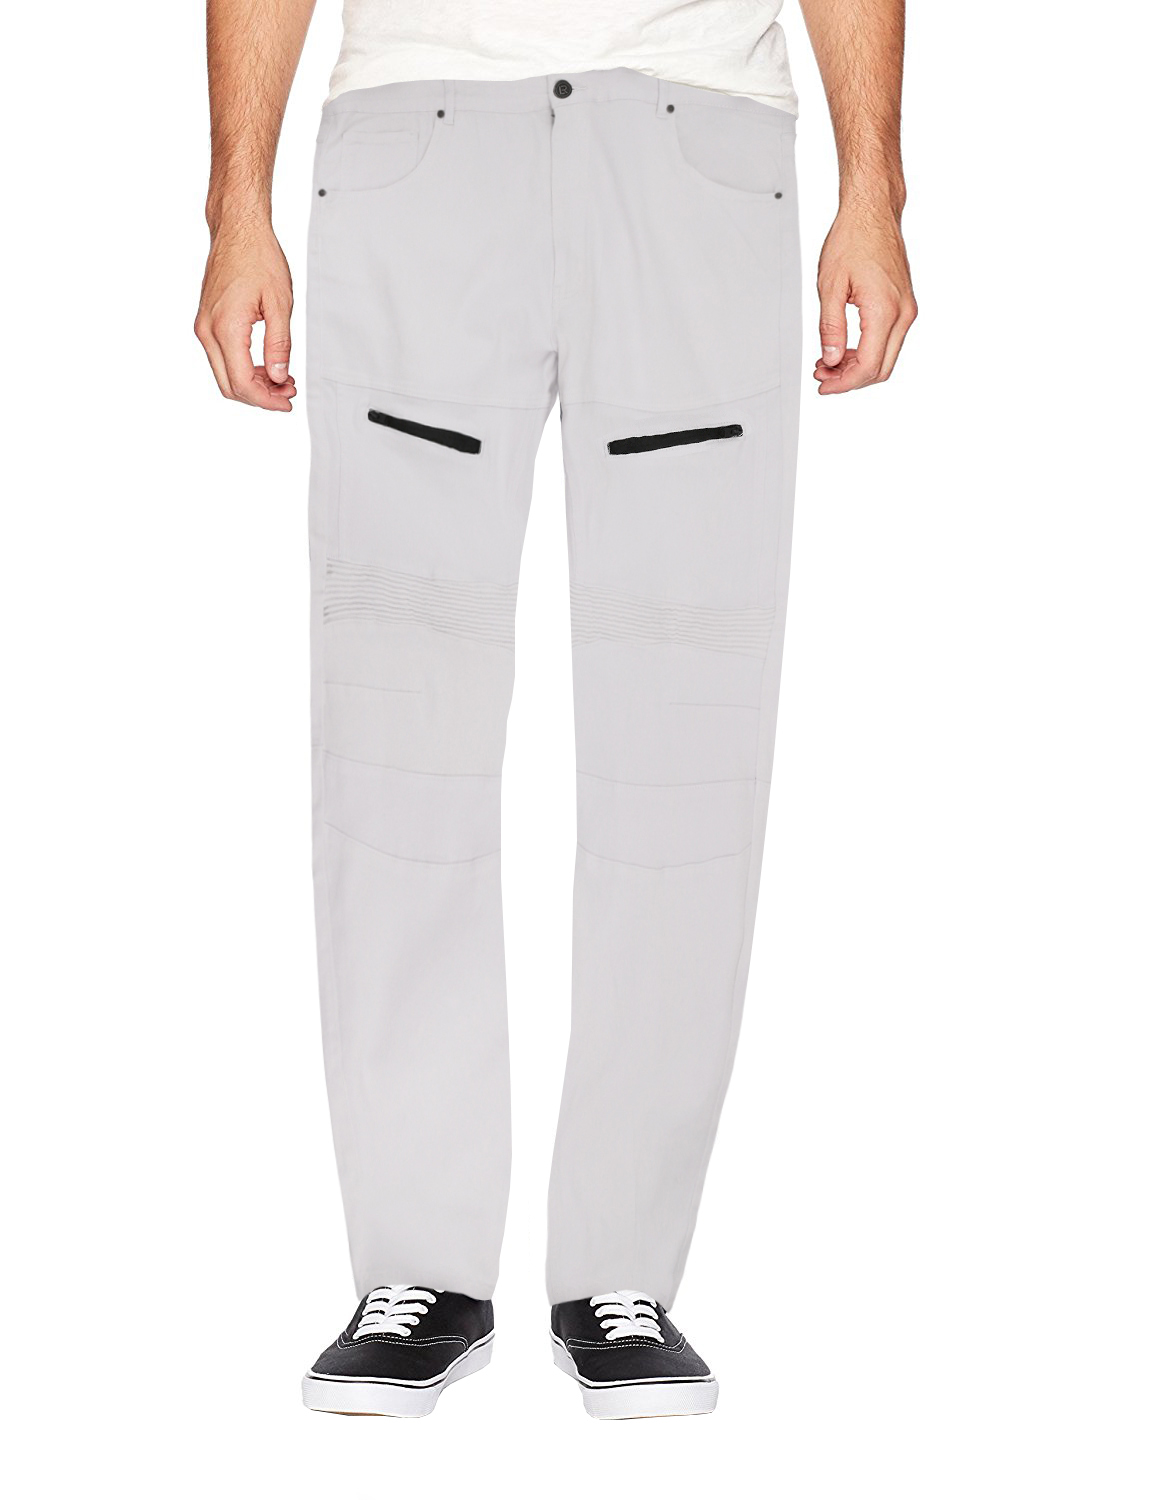 LR Scoop Men's Casual Stretch Denim Pants Moto Quilt Zipper Fashion Solid Jeans (White, 50x32) - image 1 of 3